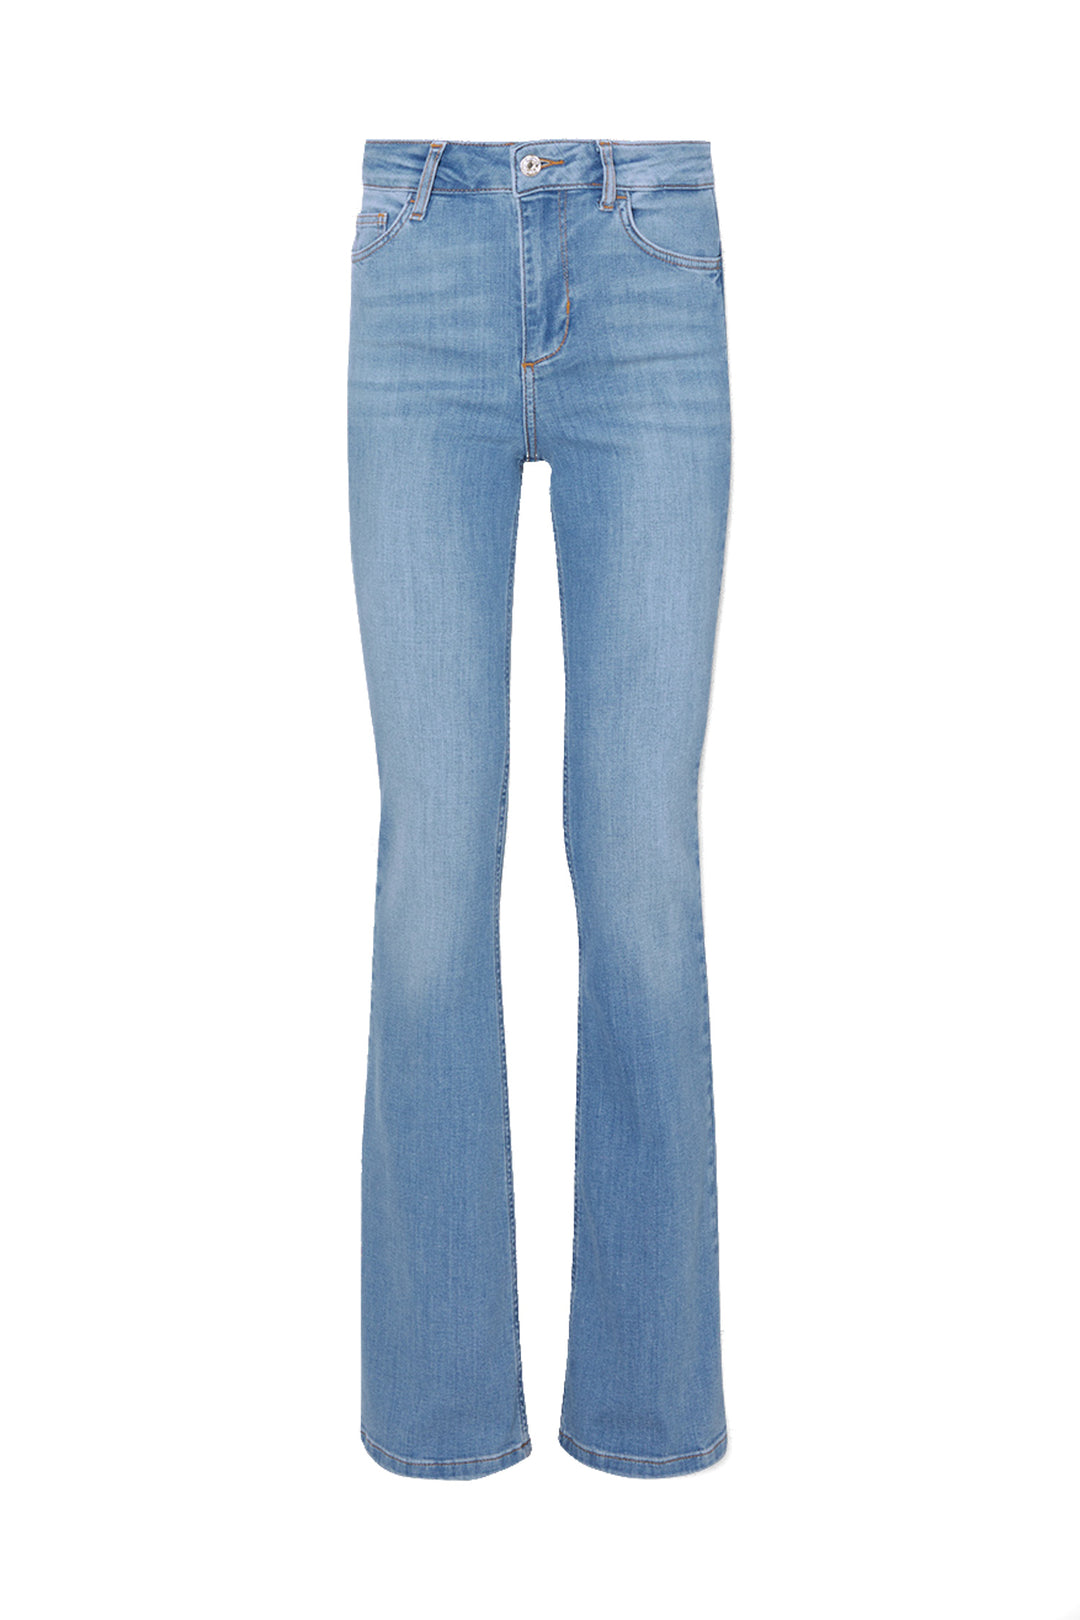 LIU JO Jeans flare vita alta Bottom Up in denim stretch chiaro - Mancinelli 1954